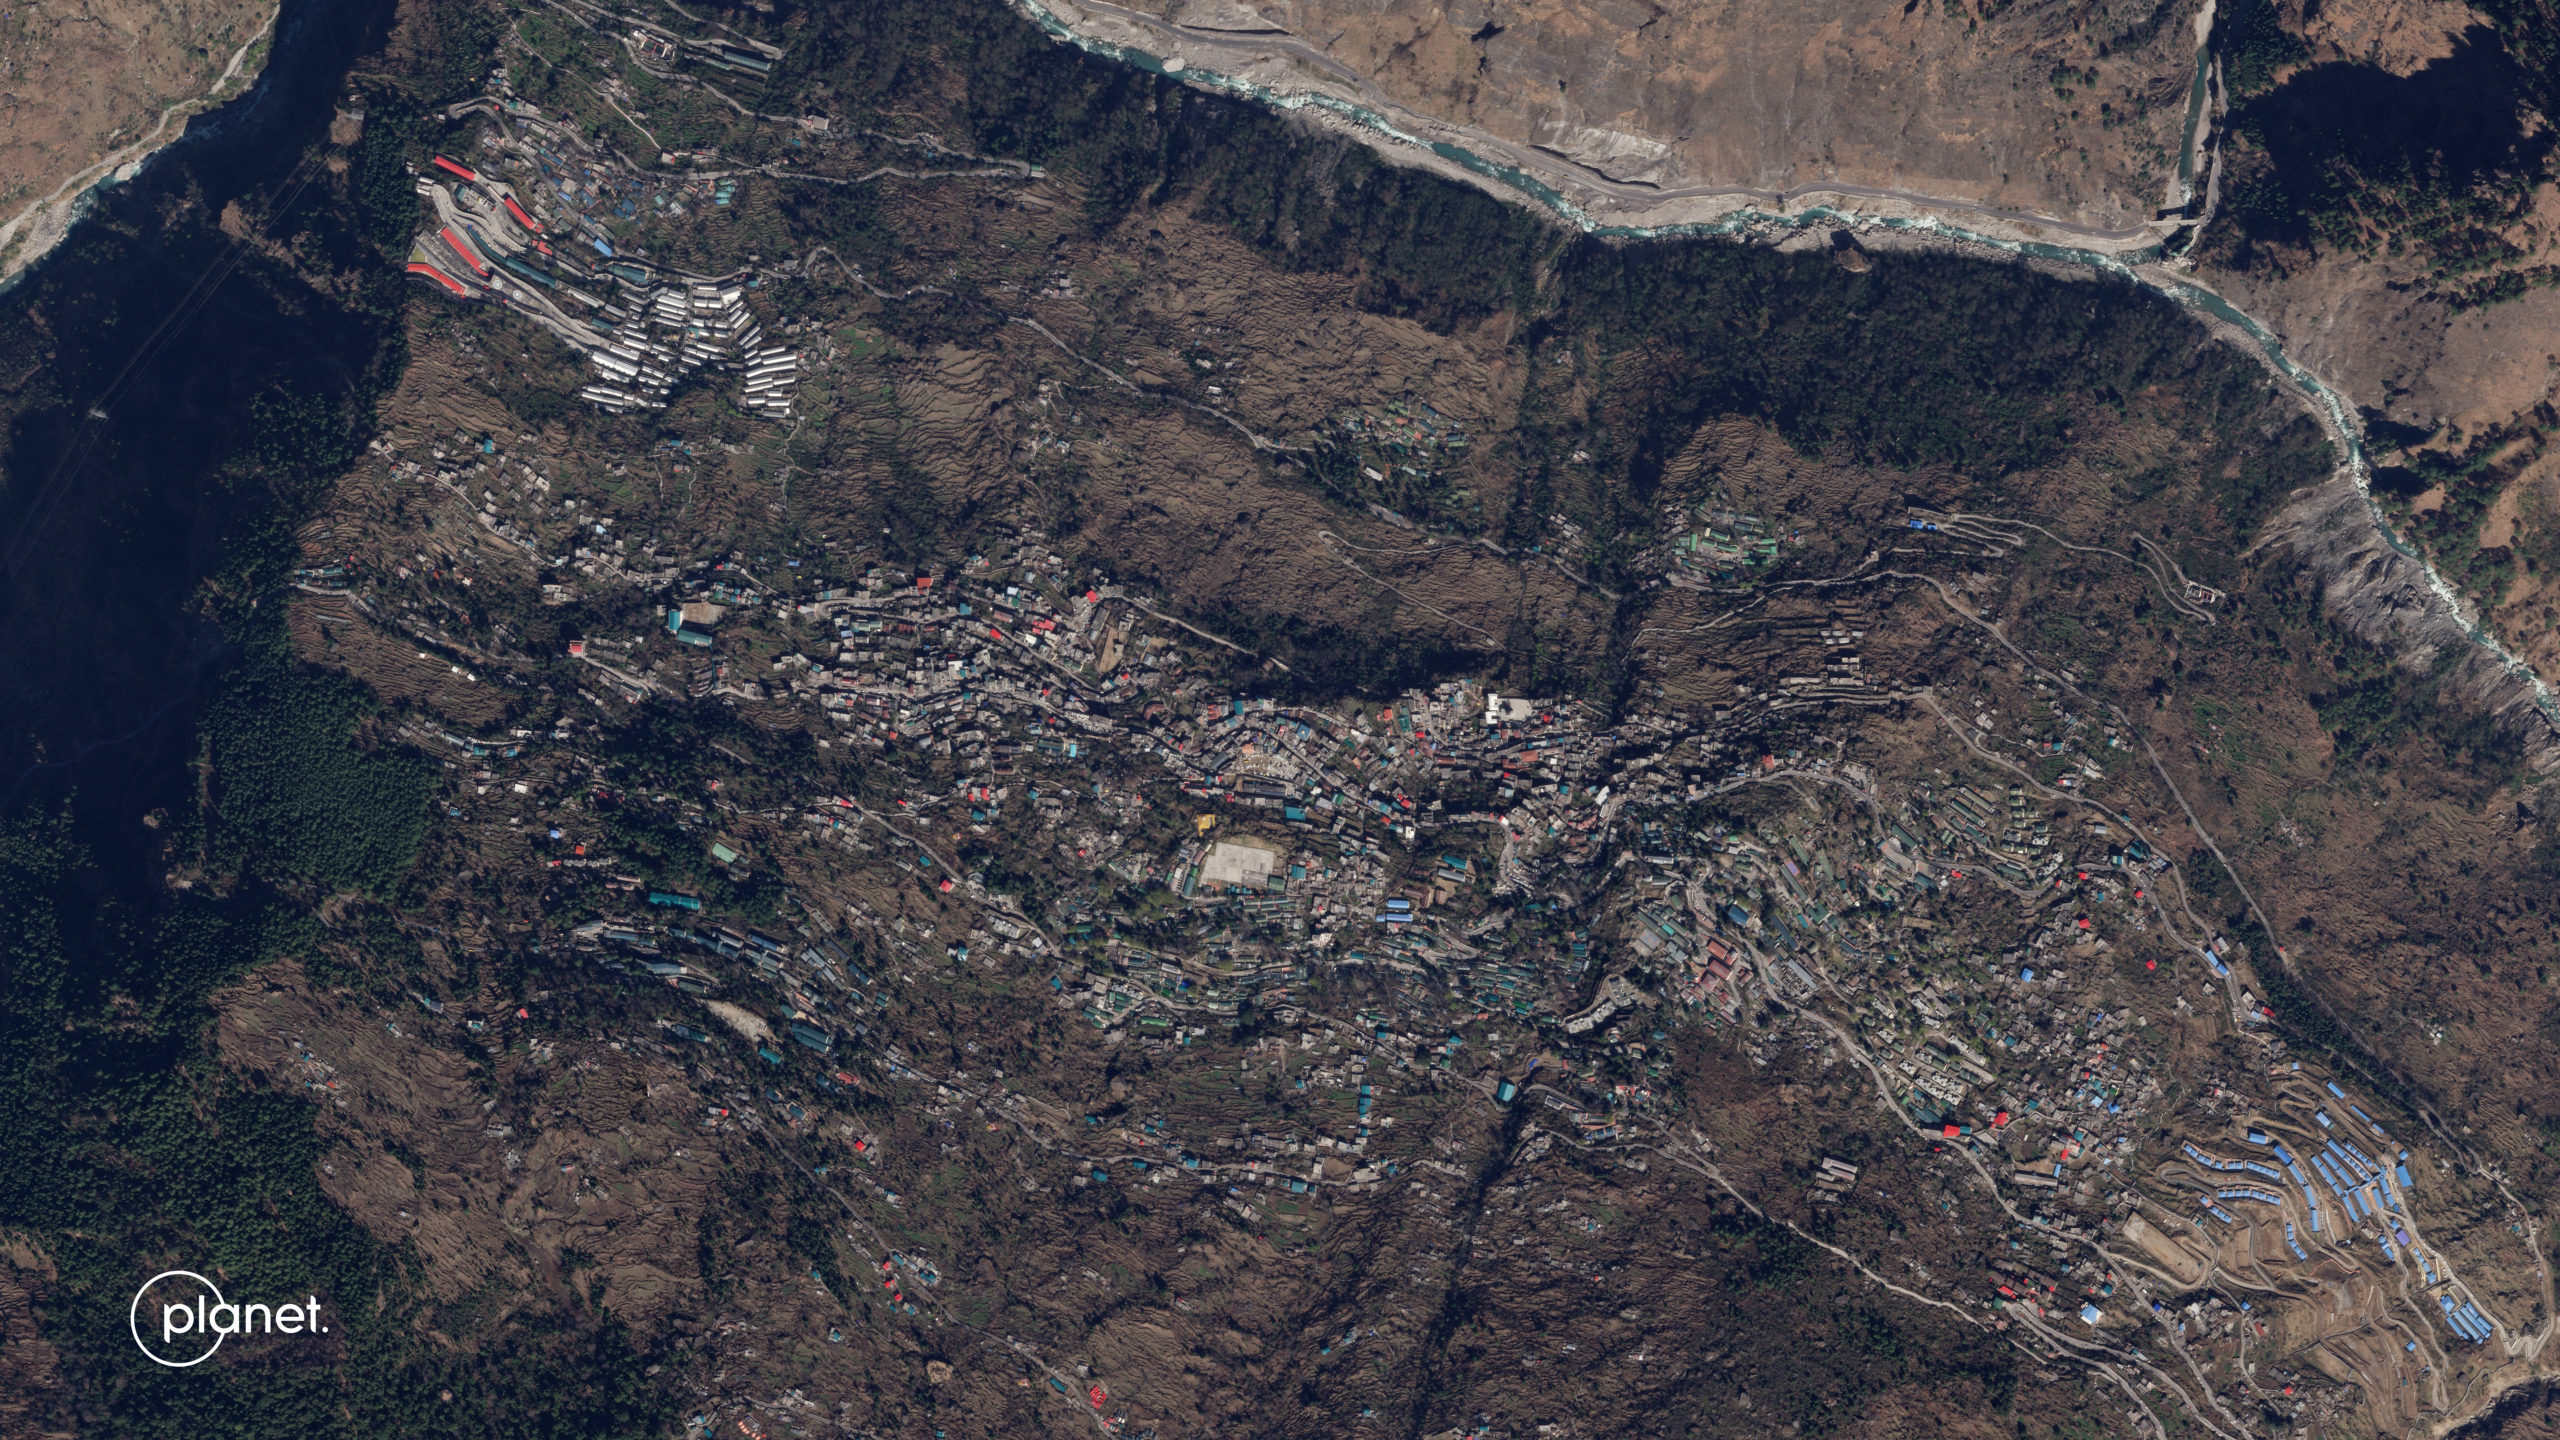 High resolution image of the Joshimath landslide.